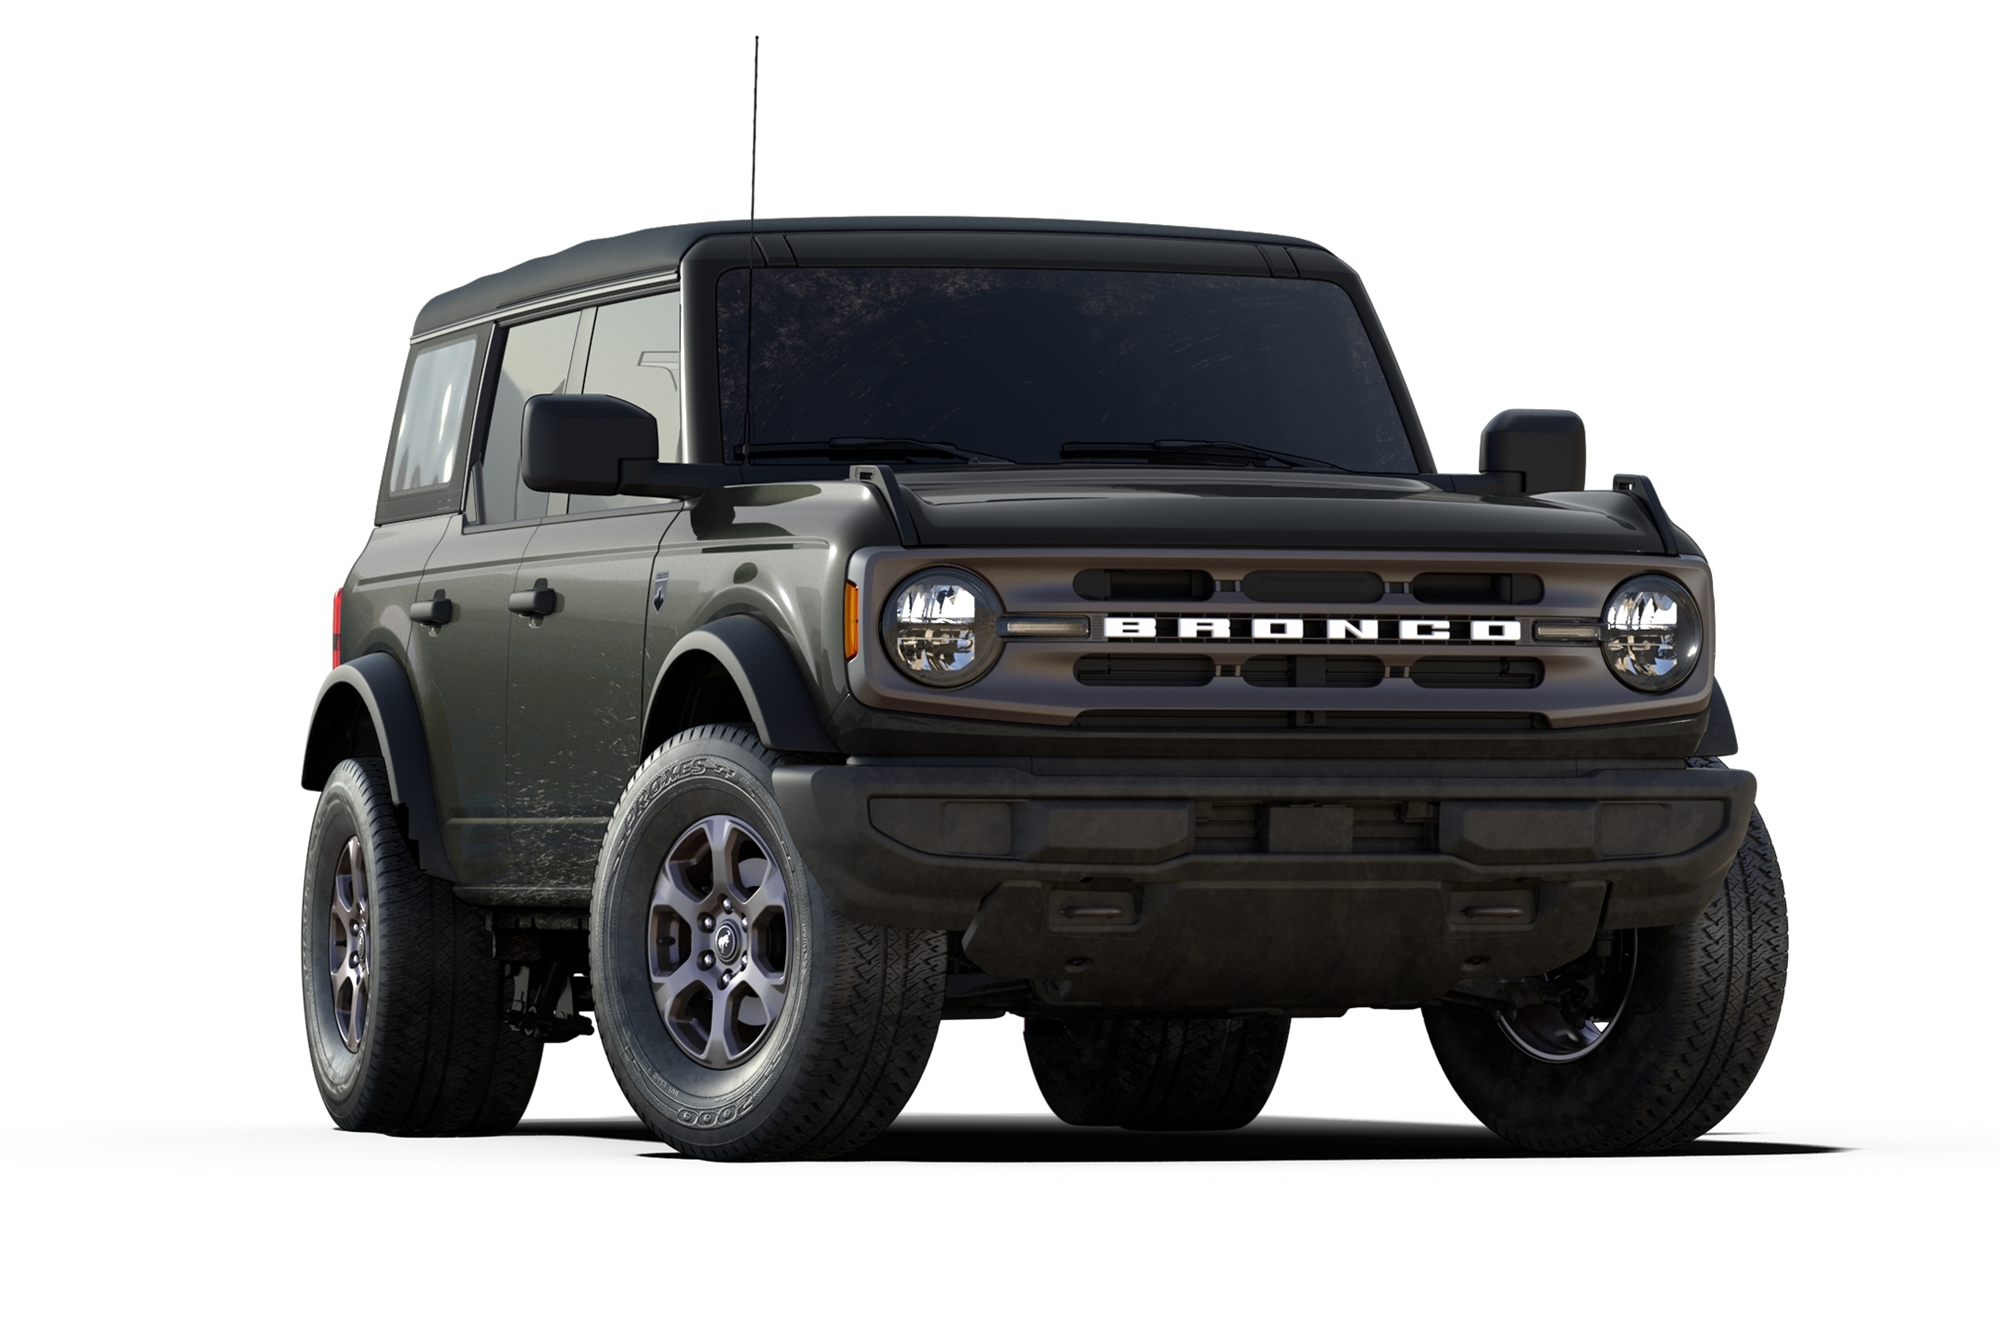 2021 Ford Bronco Black Diamond 2-Door Full Specs, Features and Price